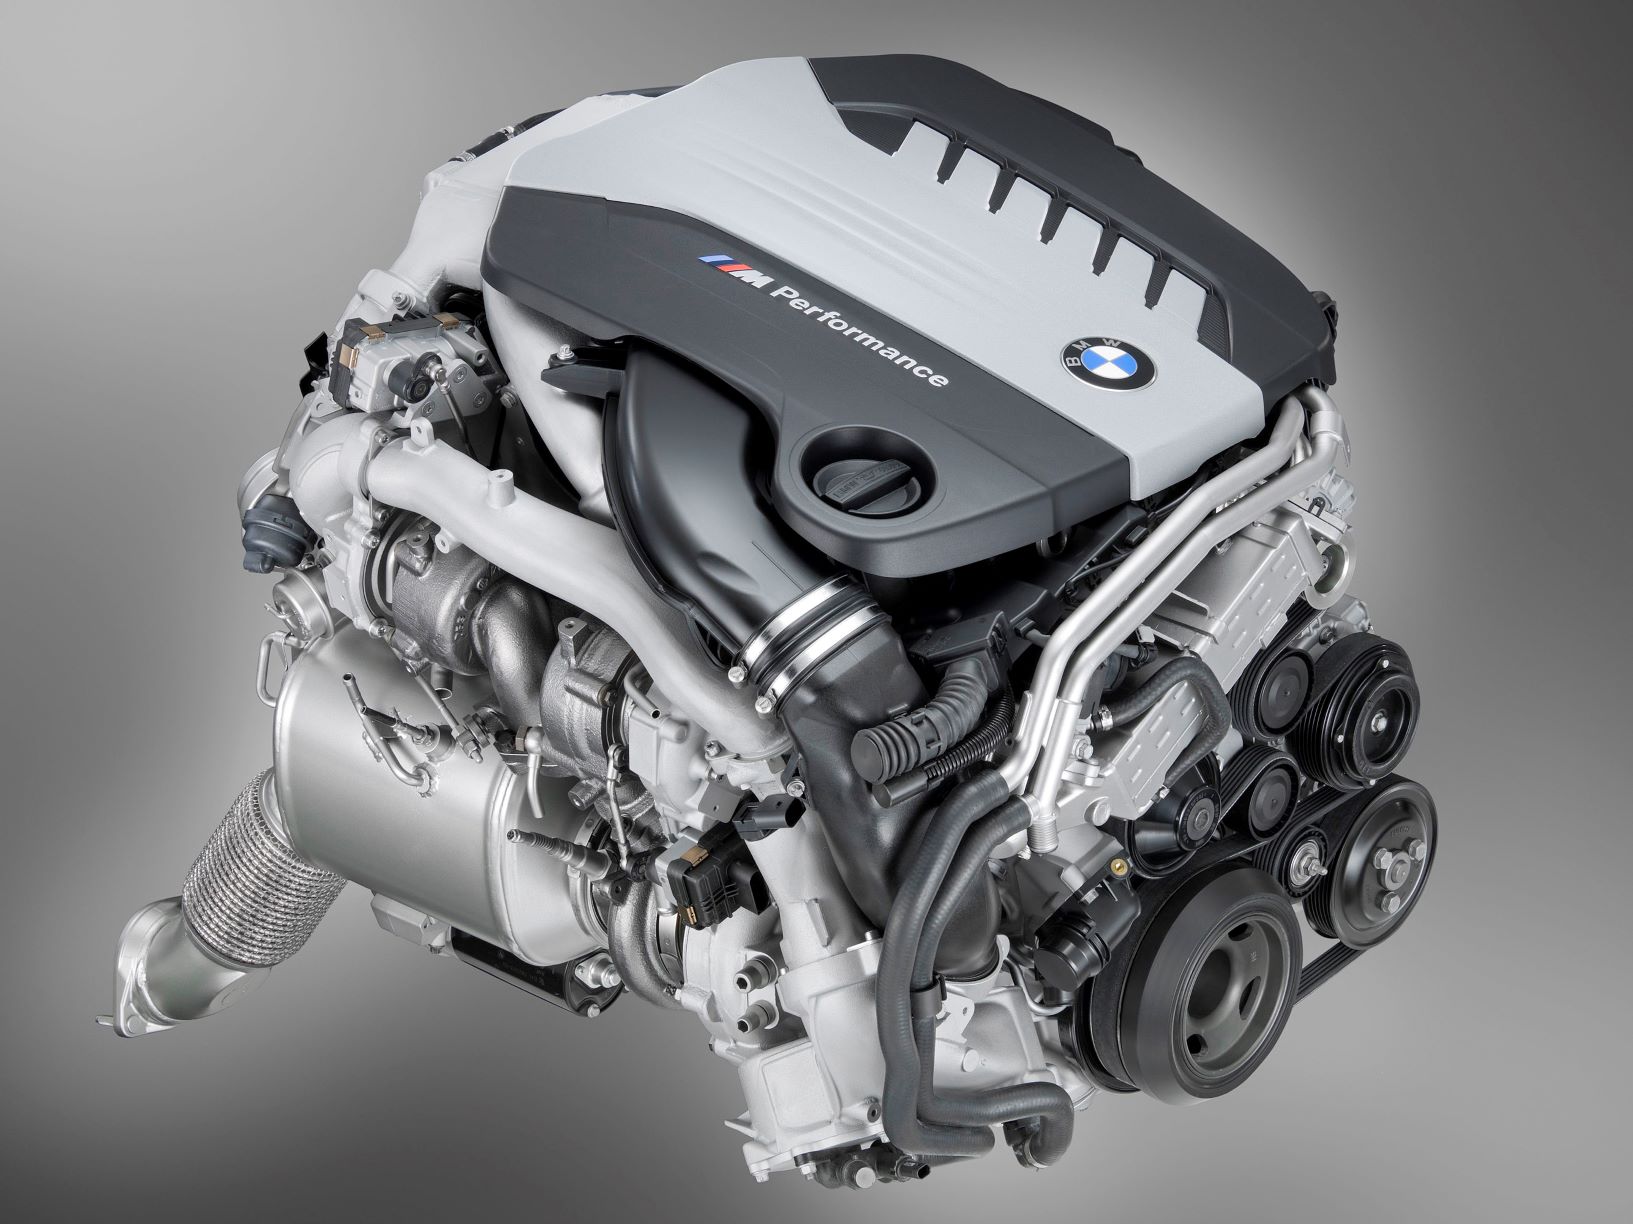 Inlocuire distributie motor N57 BMW